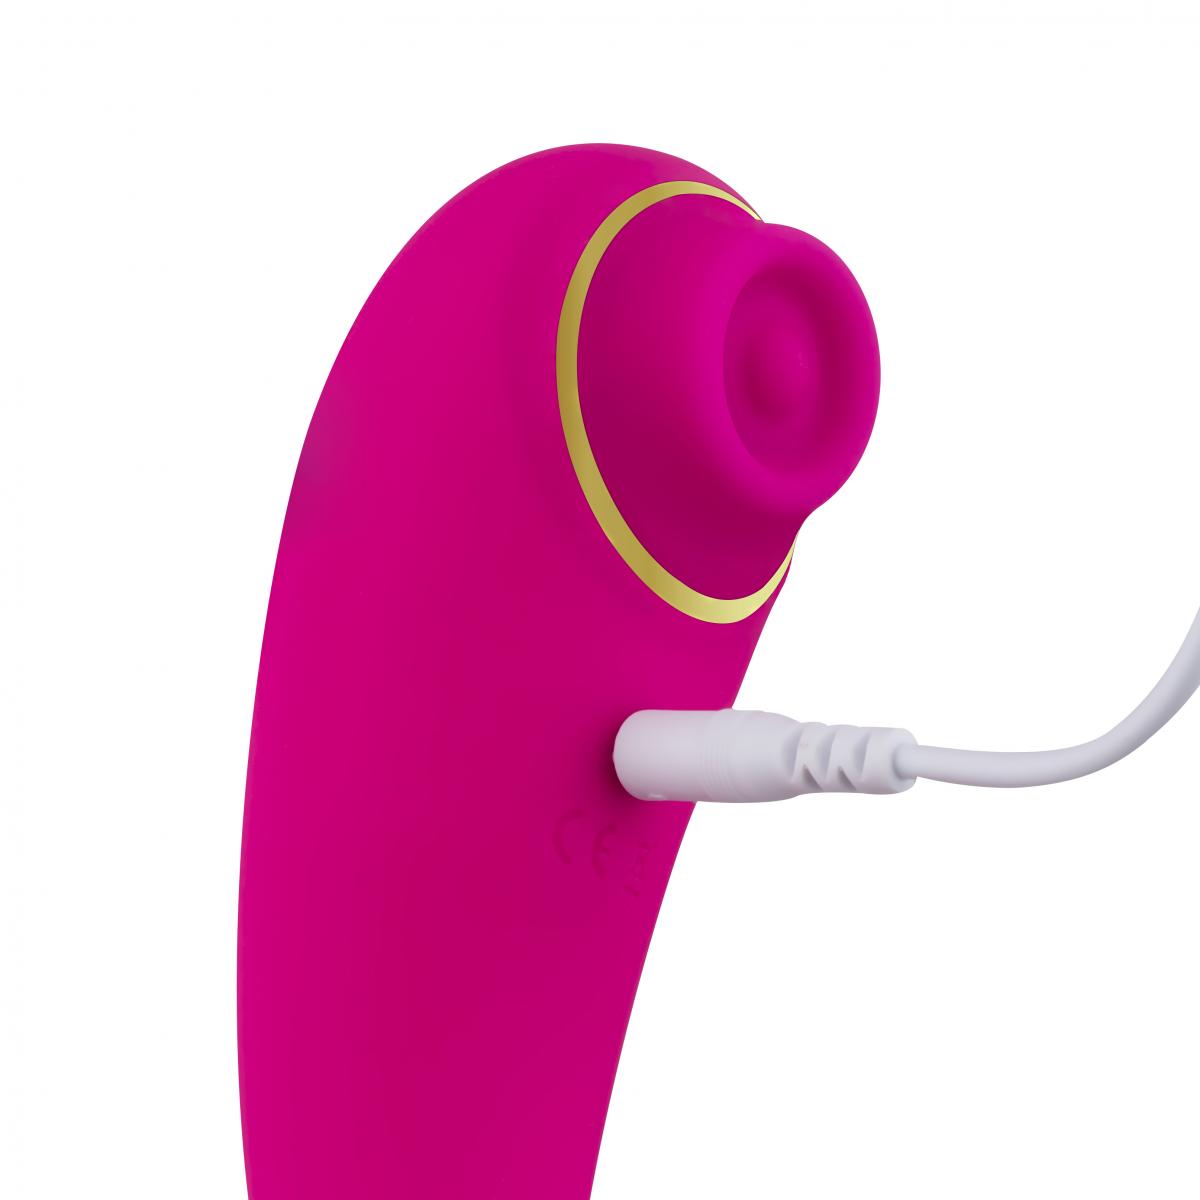 Teazers Tapping Clitoris Stimulator